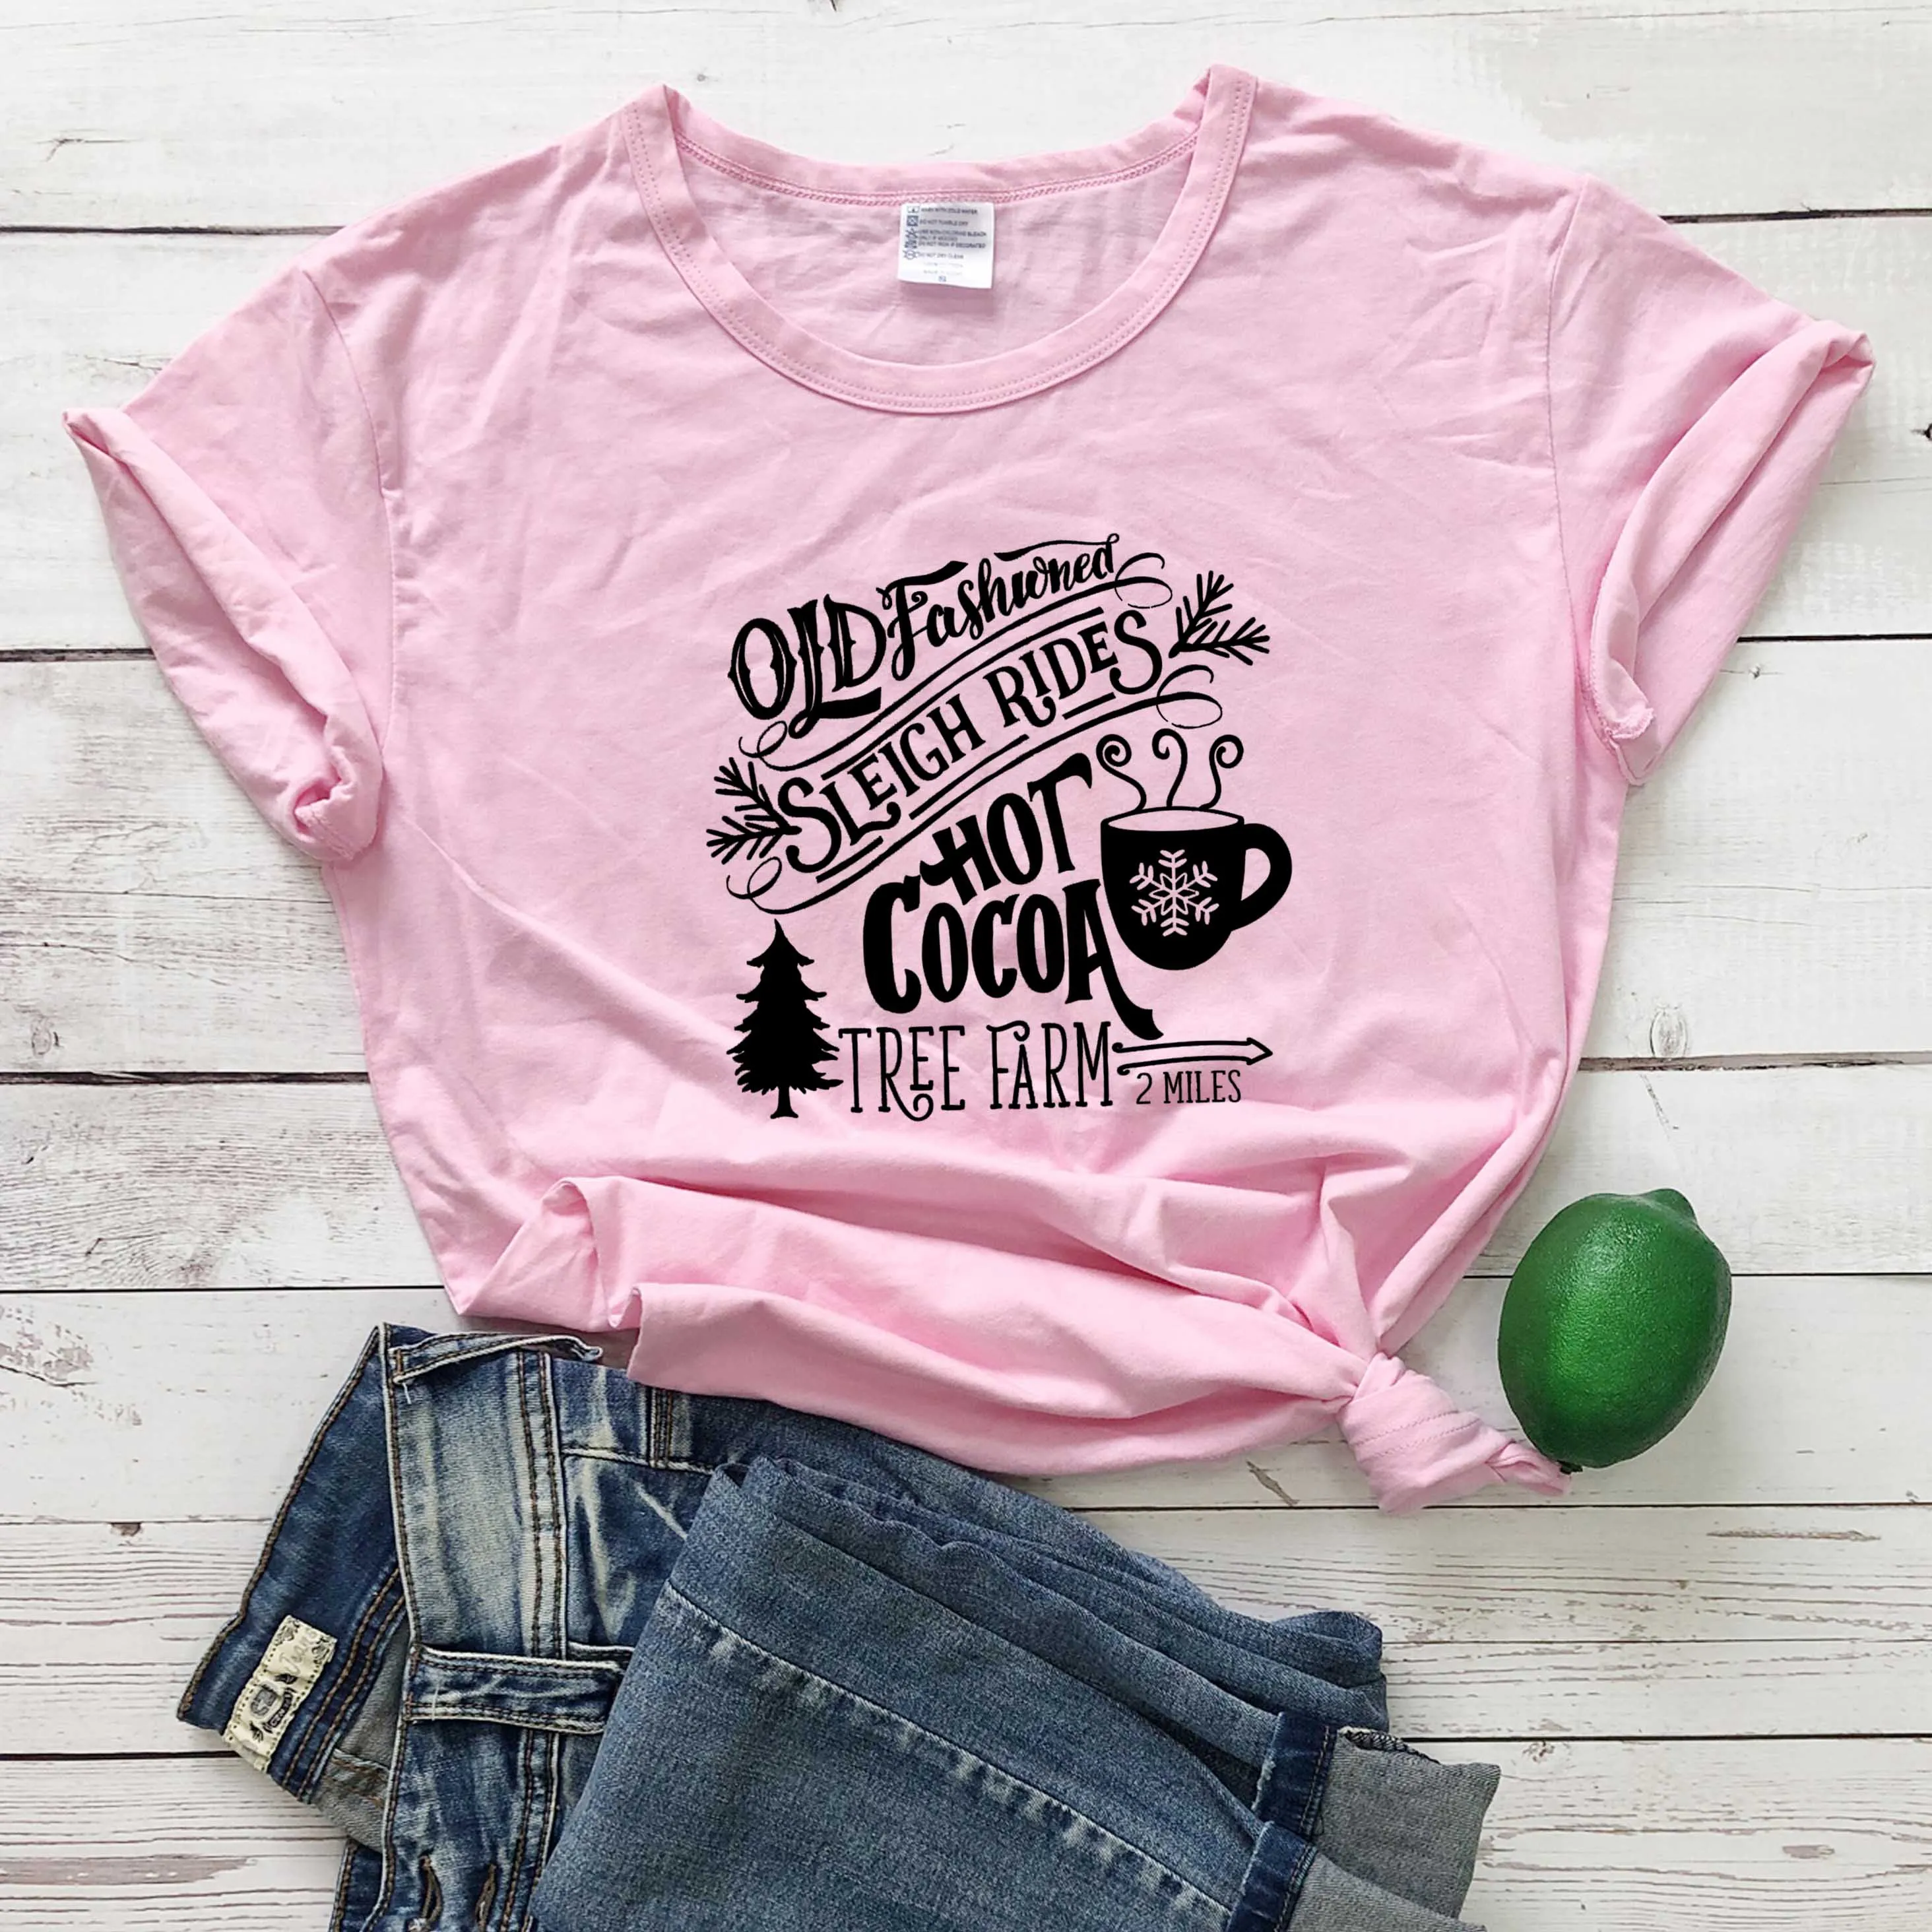 

Old Fashioned Hot Cocoa Sleigh Rides t shirt camiseta rosa feminina pure cotton casual graphic slogan fashion tees holiday tops